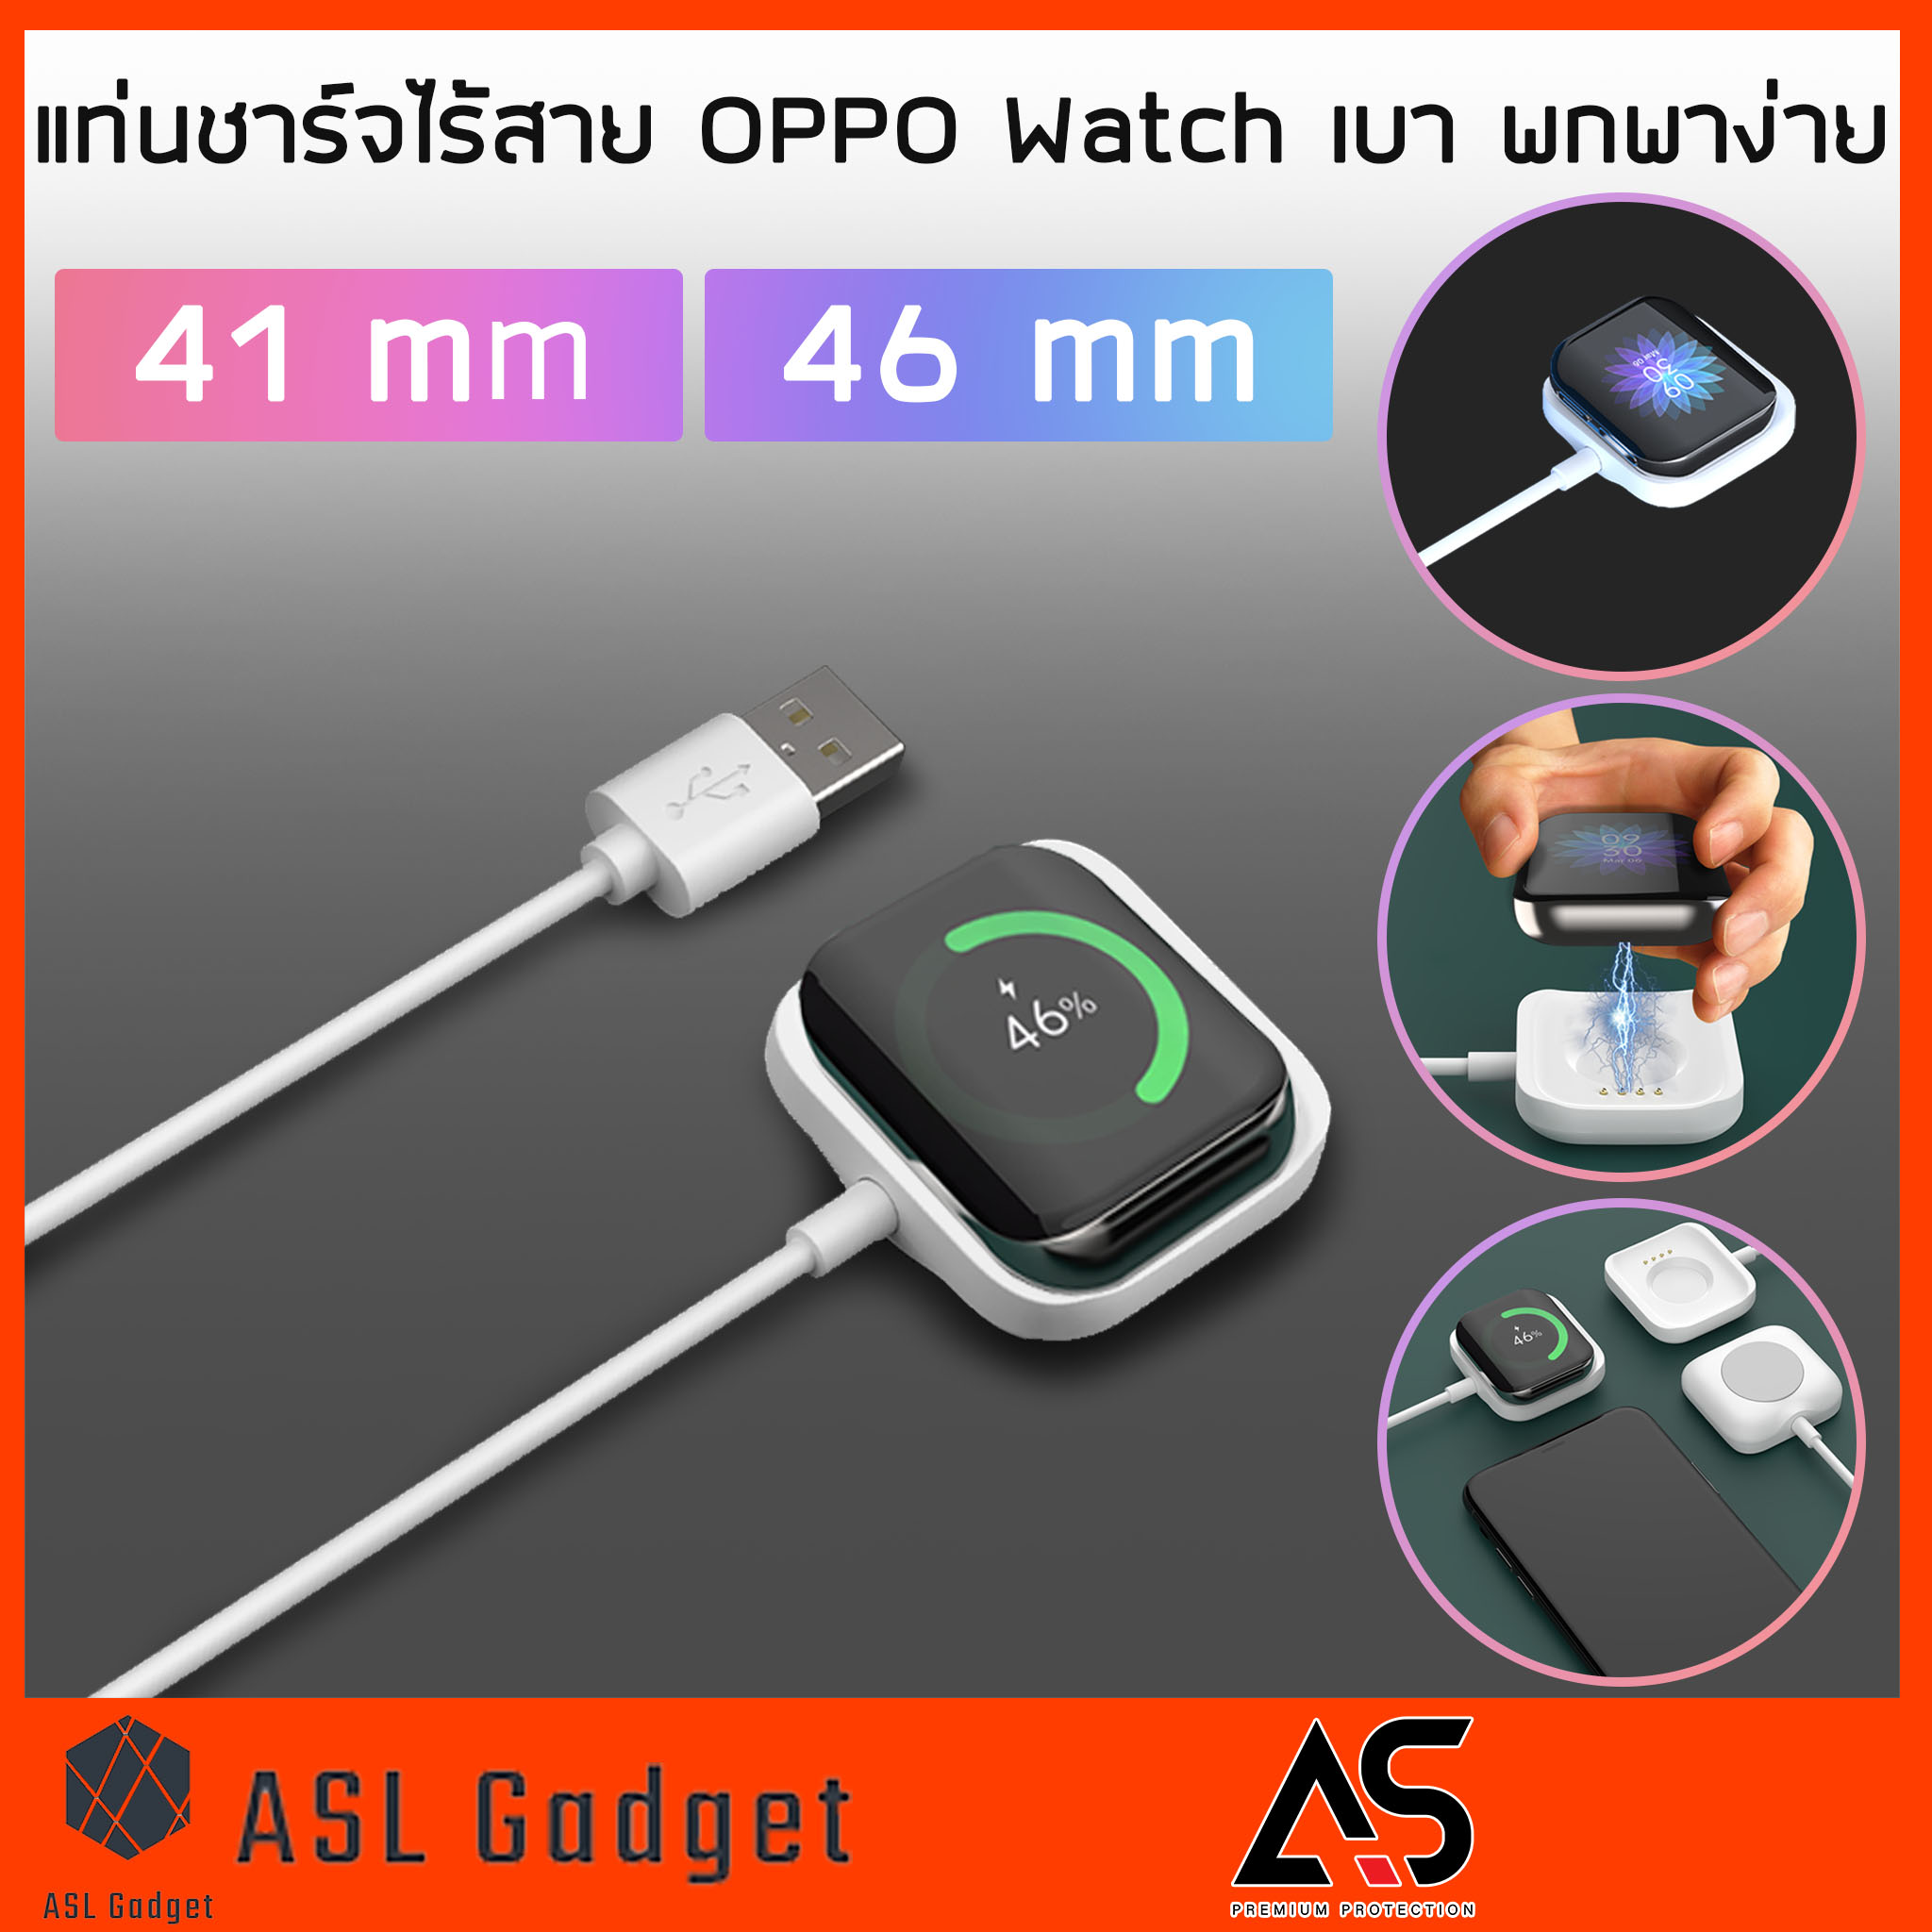 As Wireless Charger แท่นชาร์จ For OPPO Watch 41 mm และ 46 mm น้ำหนักเบา ชิ้นเล็ก พกพาง่าย พร้อมสาย USB